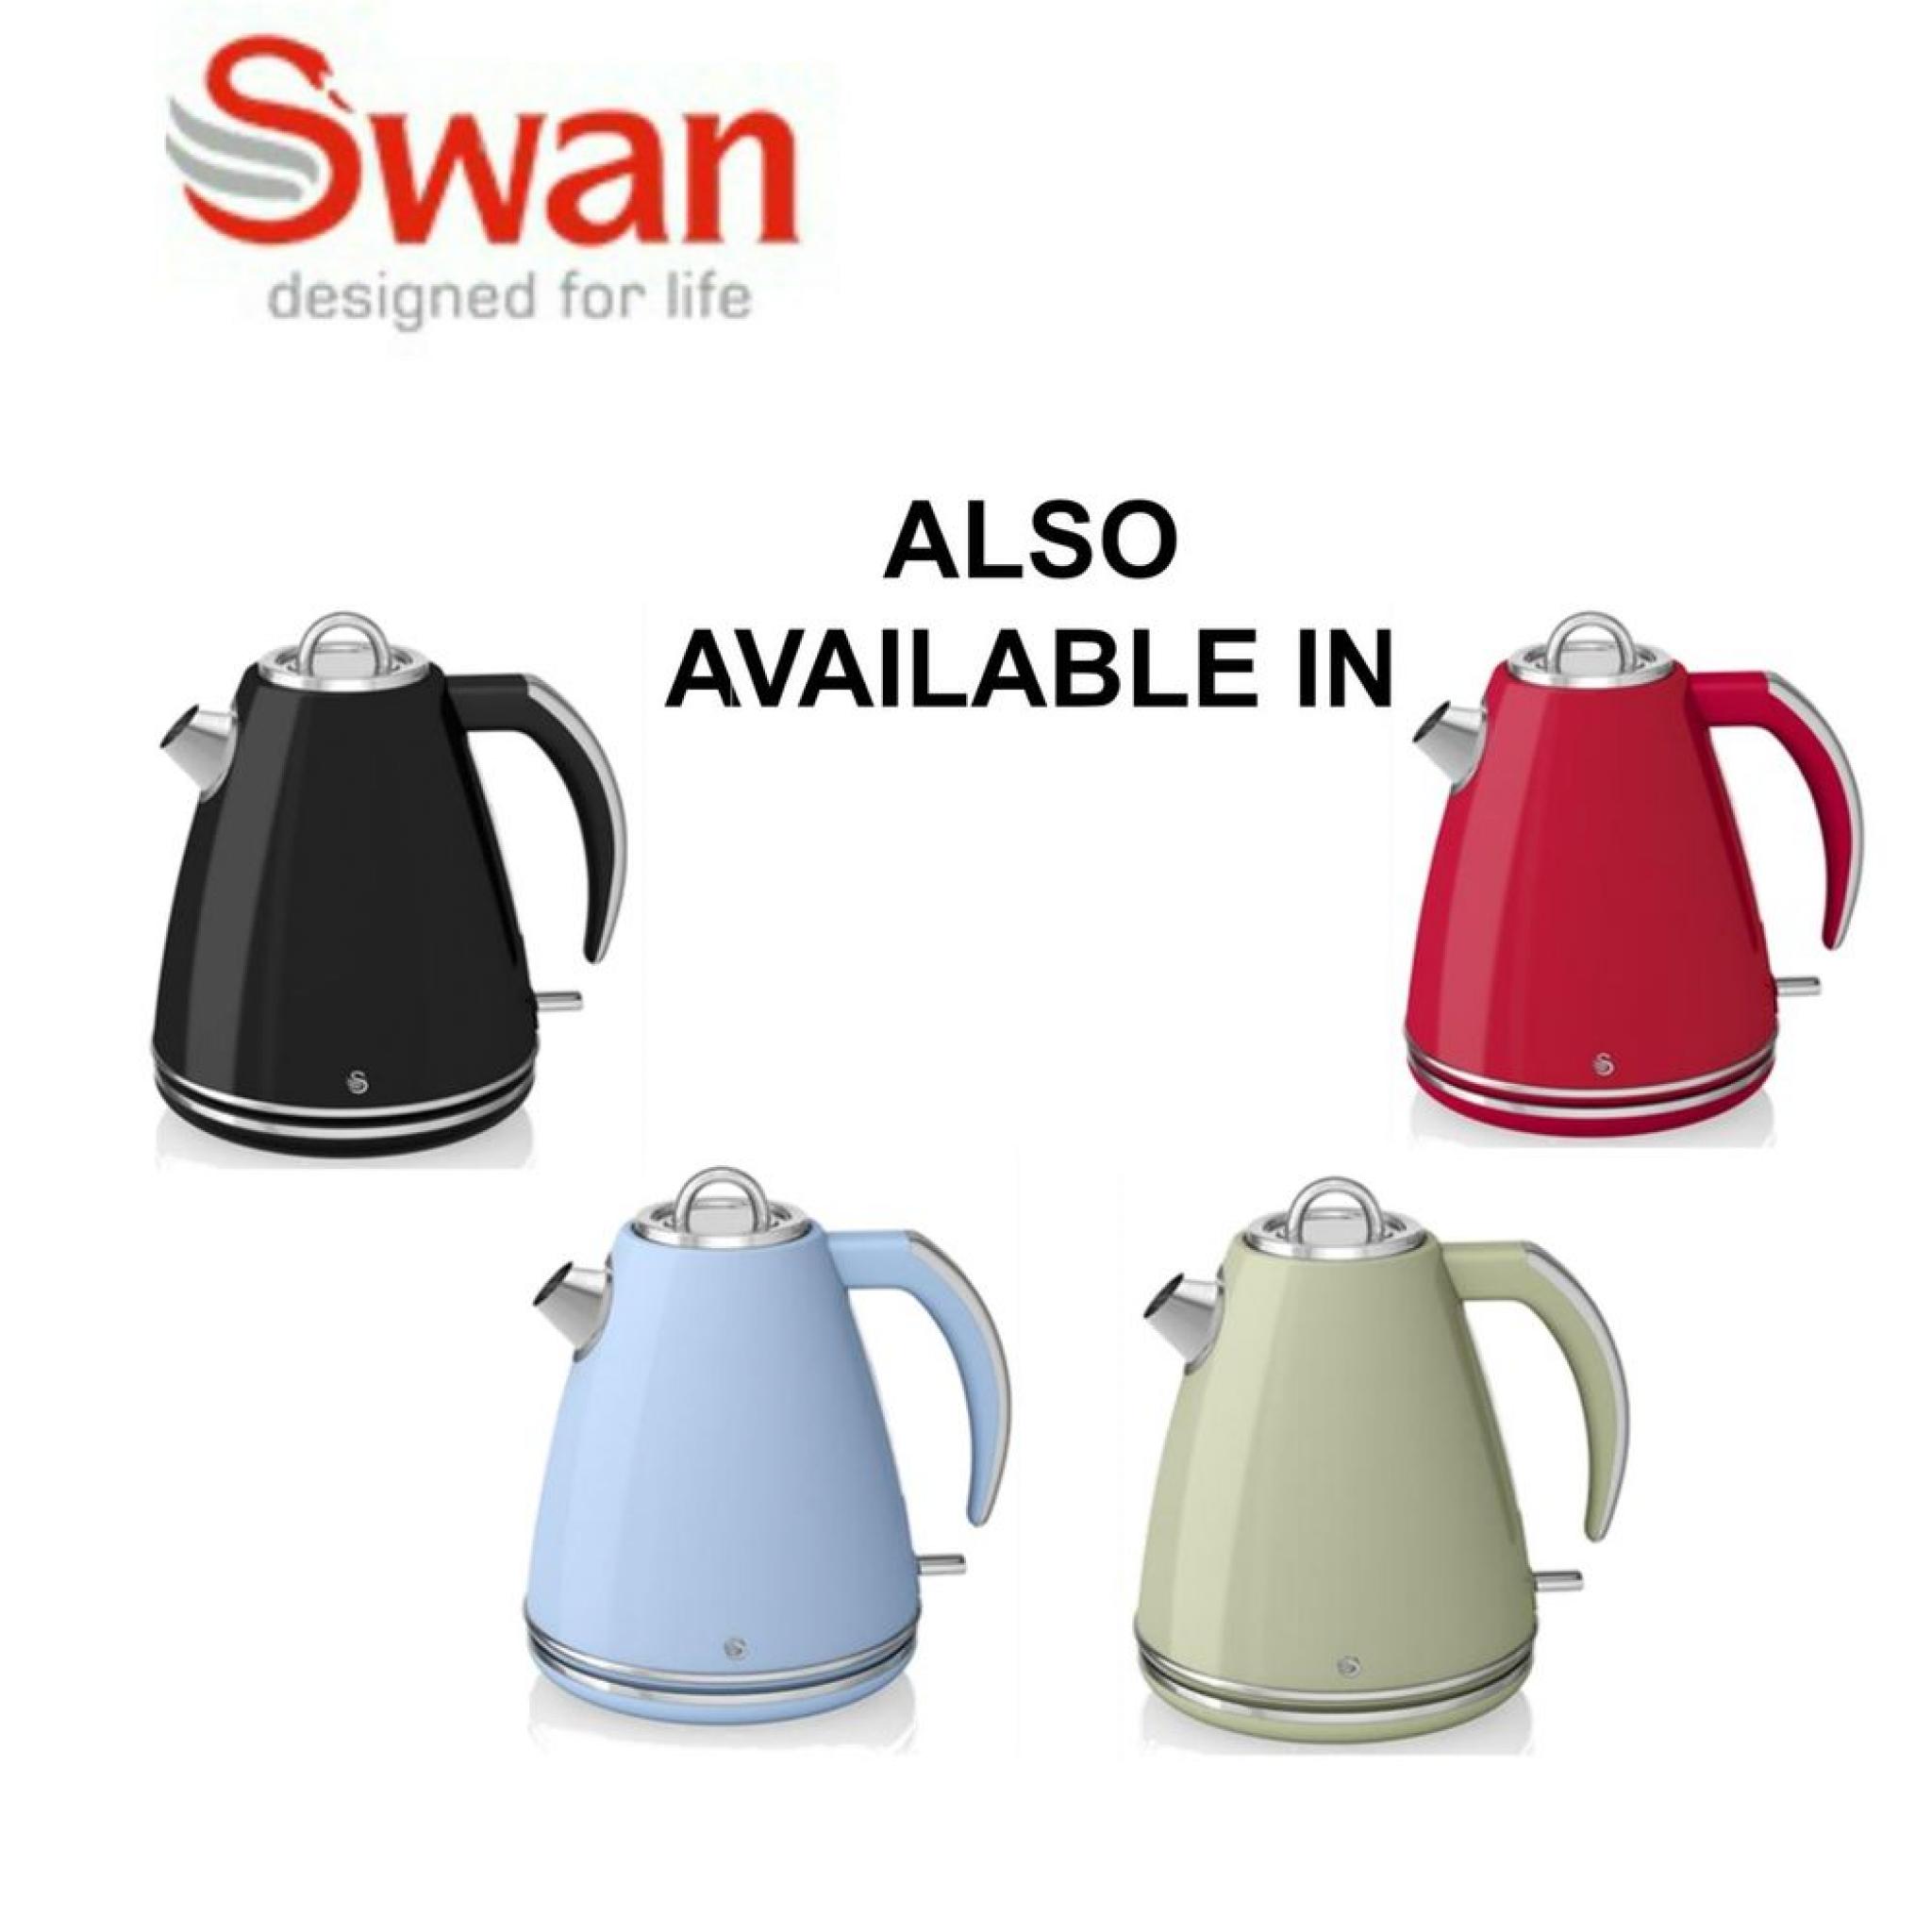 swan retro kettle cream